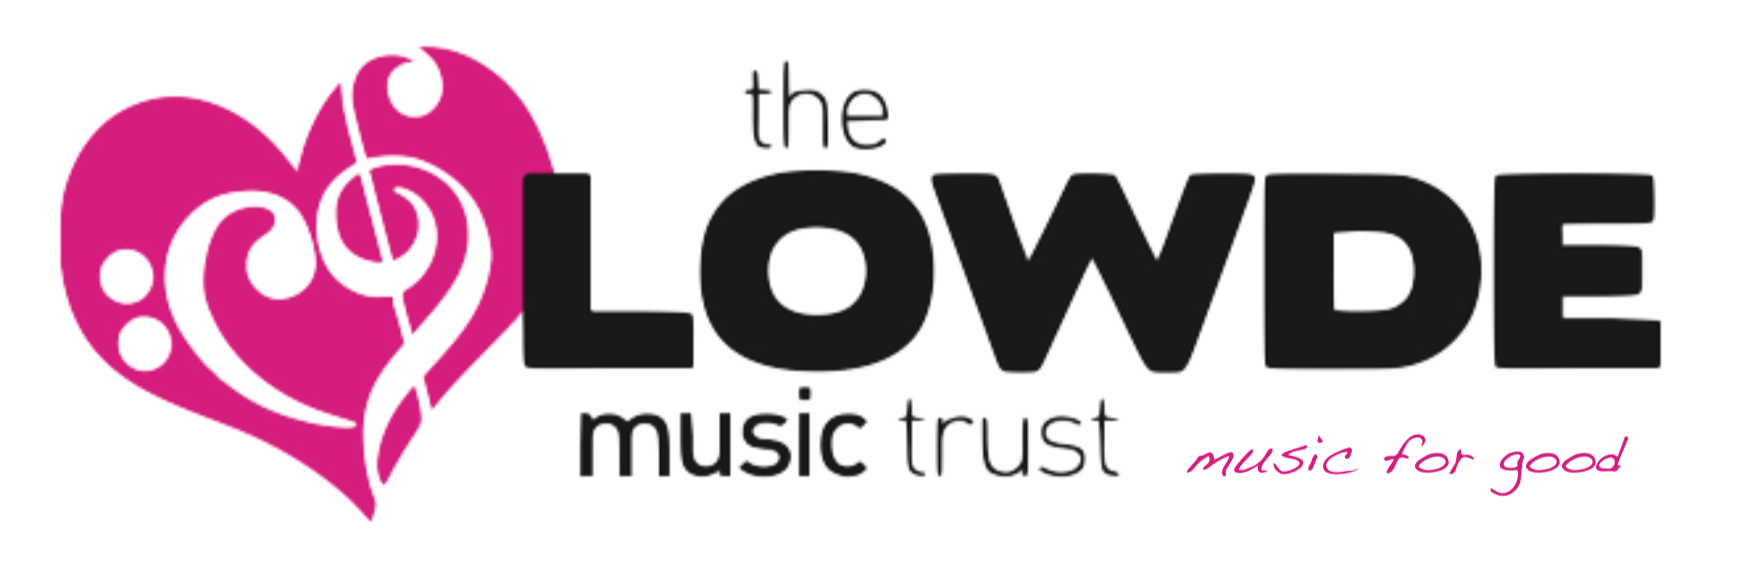 The Lowde Music Trust logo